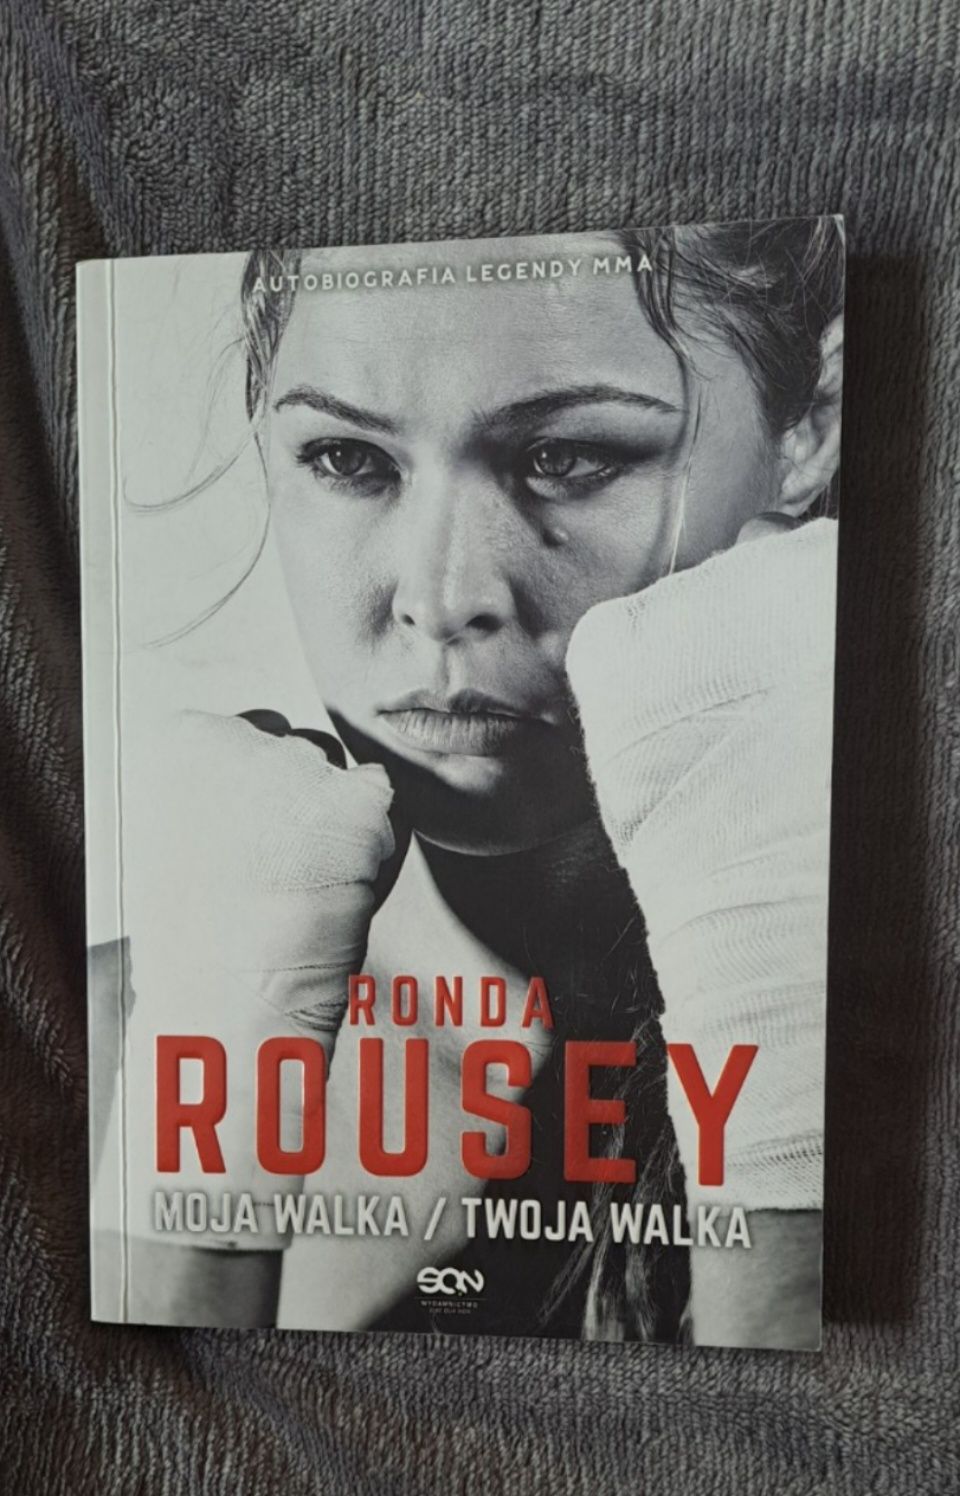 Autobiografia Ronda Rousey
Ronda RouseyMoja walka/Twoja walka”
„Ronda